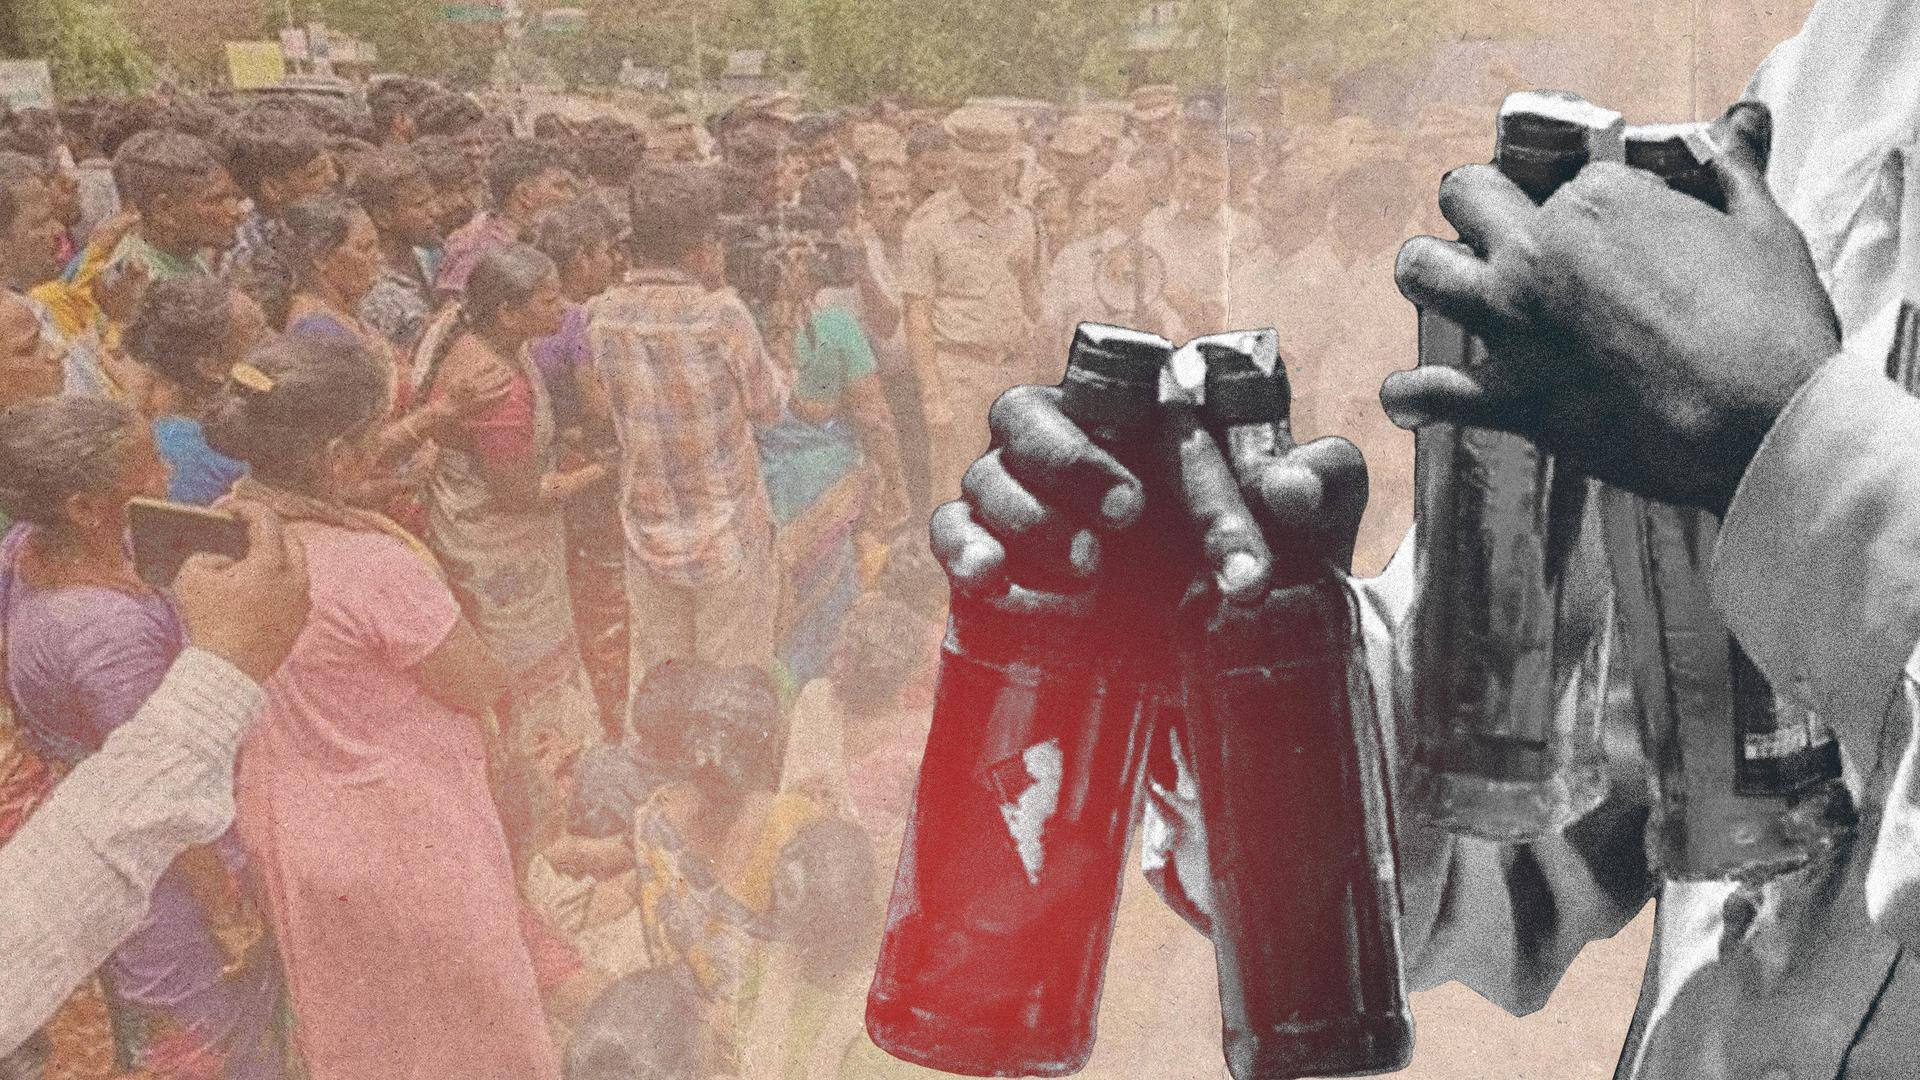 Tamil Nadu: 13 dead after consuming spurious liquor, 9 arrested